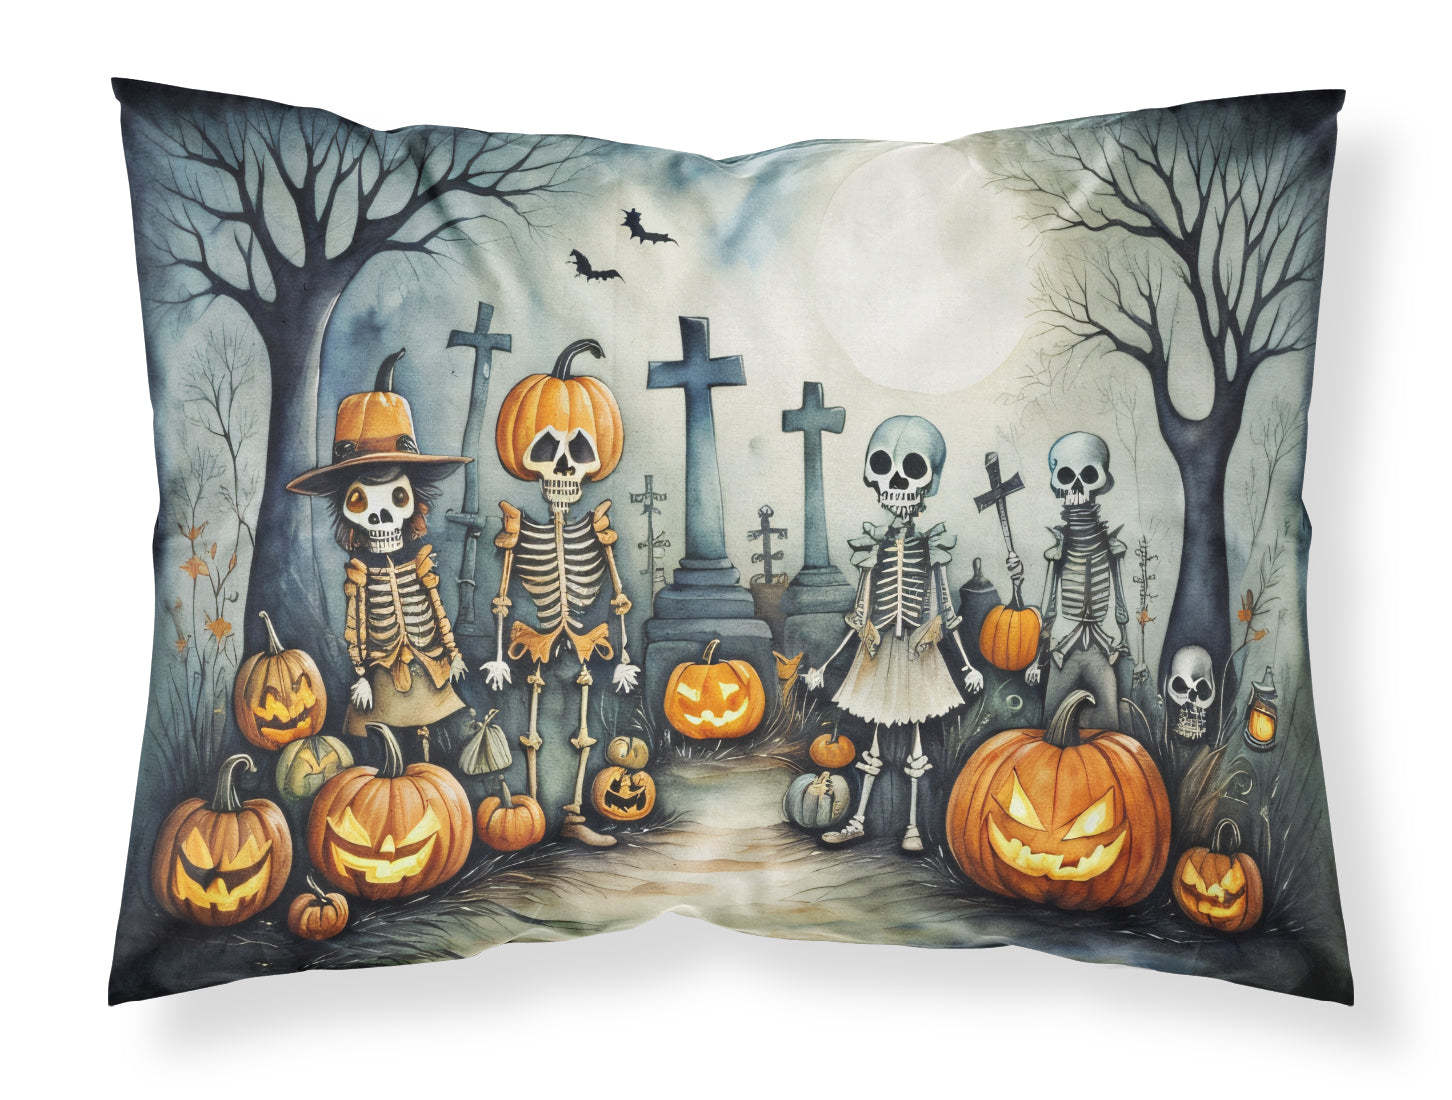 Buy this Calacas Skeletons Spooky Halloween Fabric Standard Pillowcase